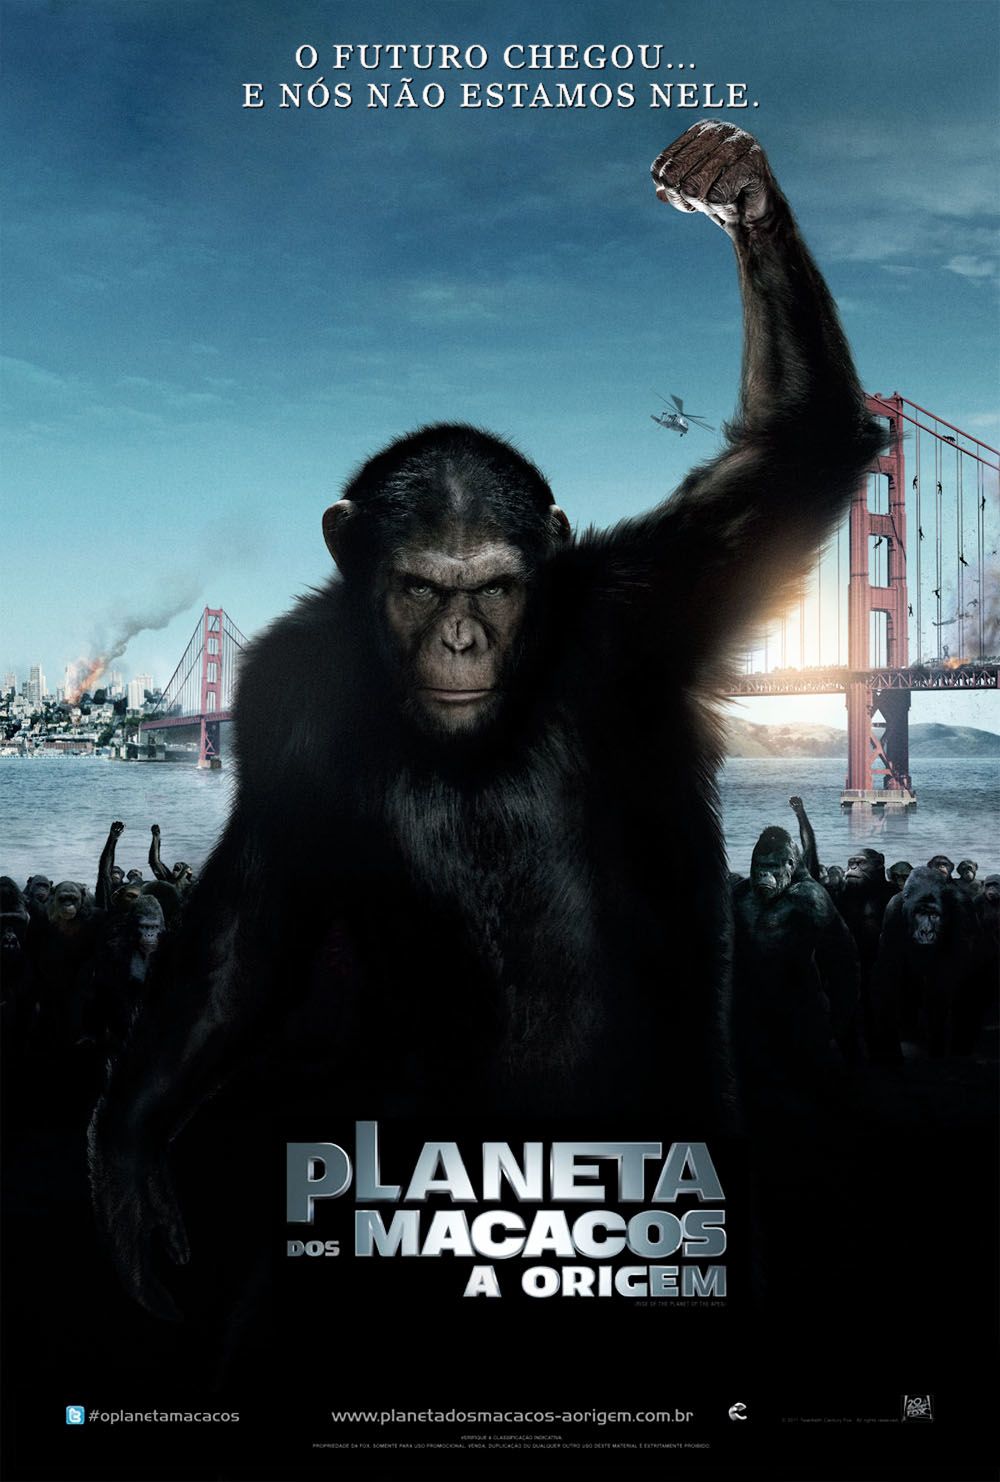 Восстание планеты обезьян